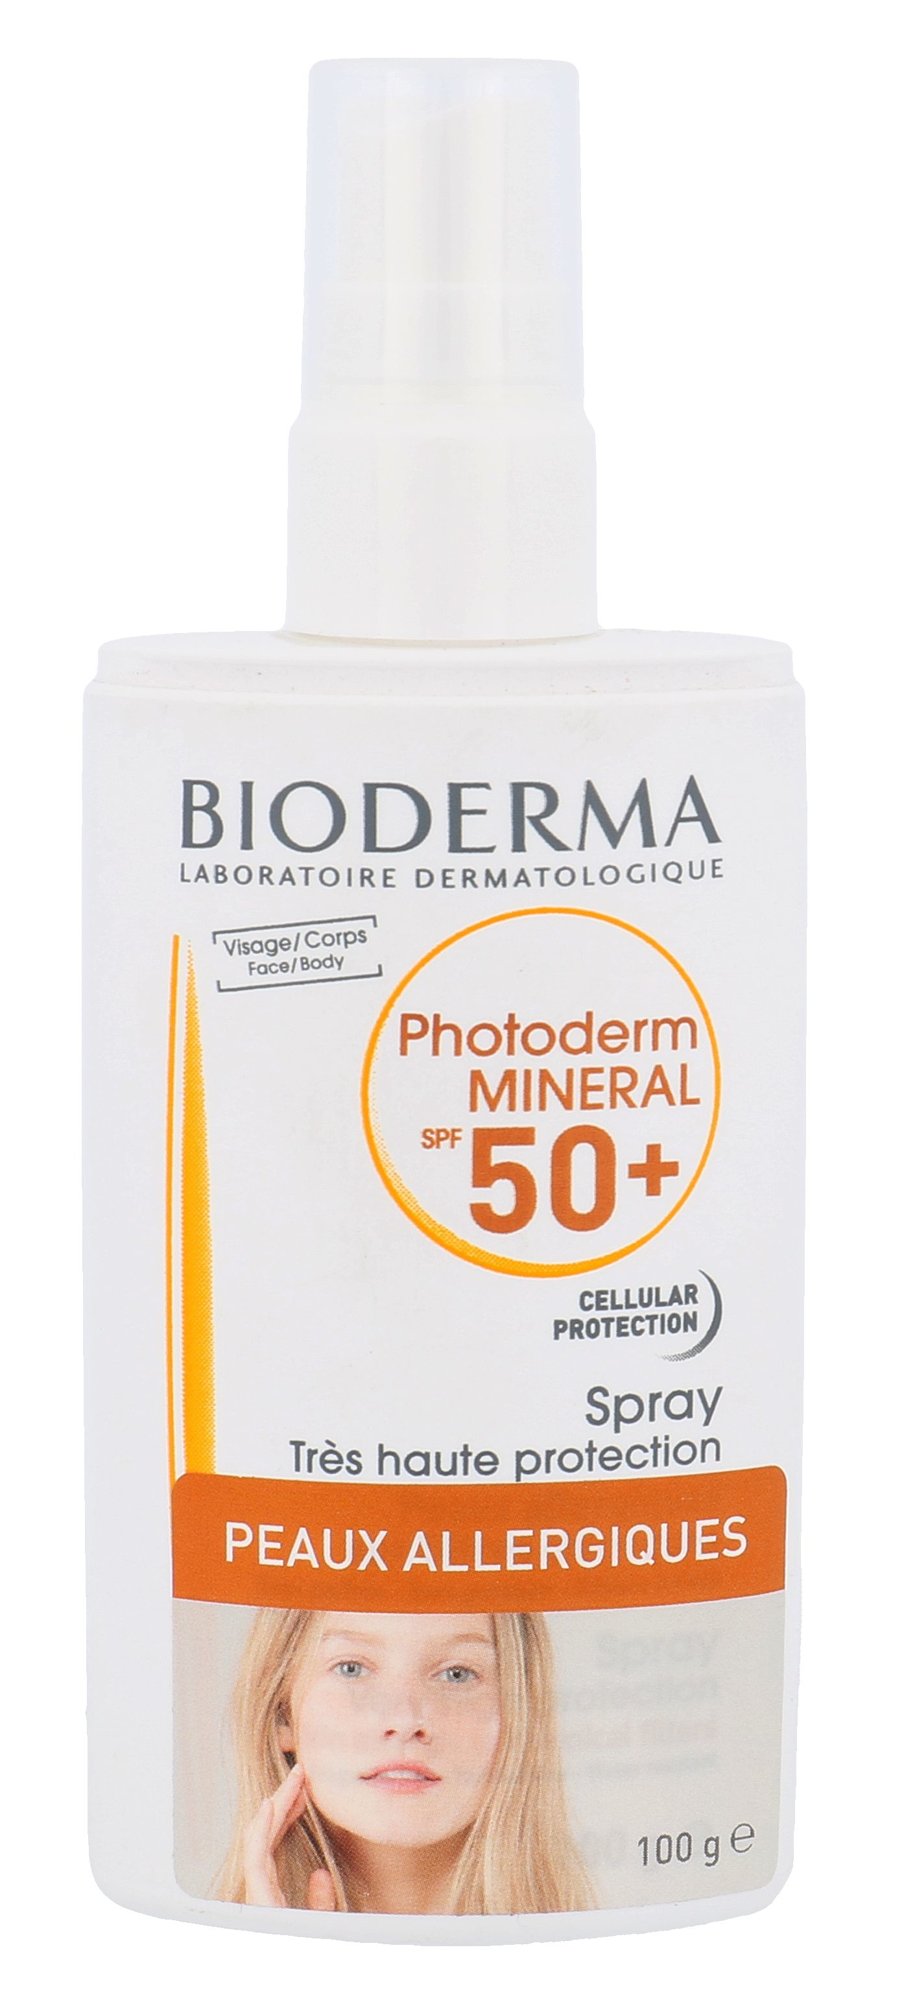 BIODERMA Photoderm Mineral Spray SPF50+ įdegio losjonas